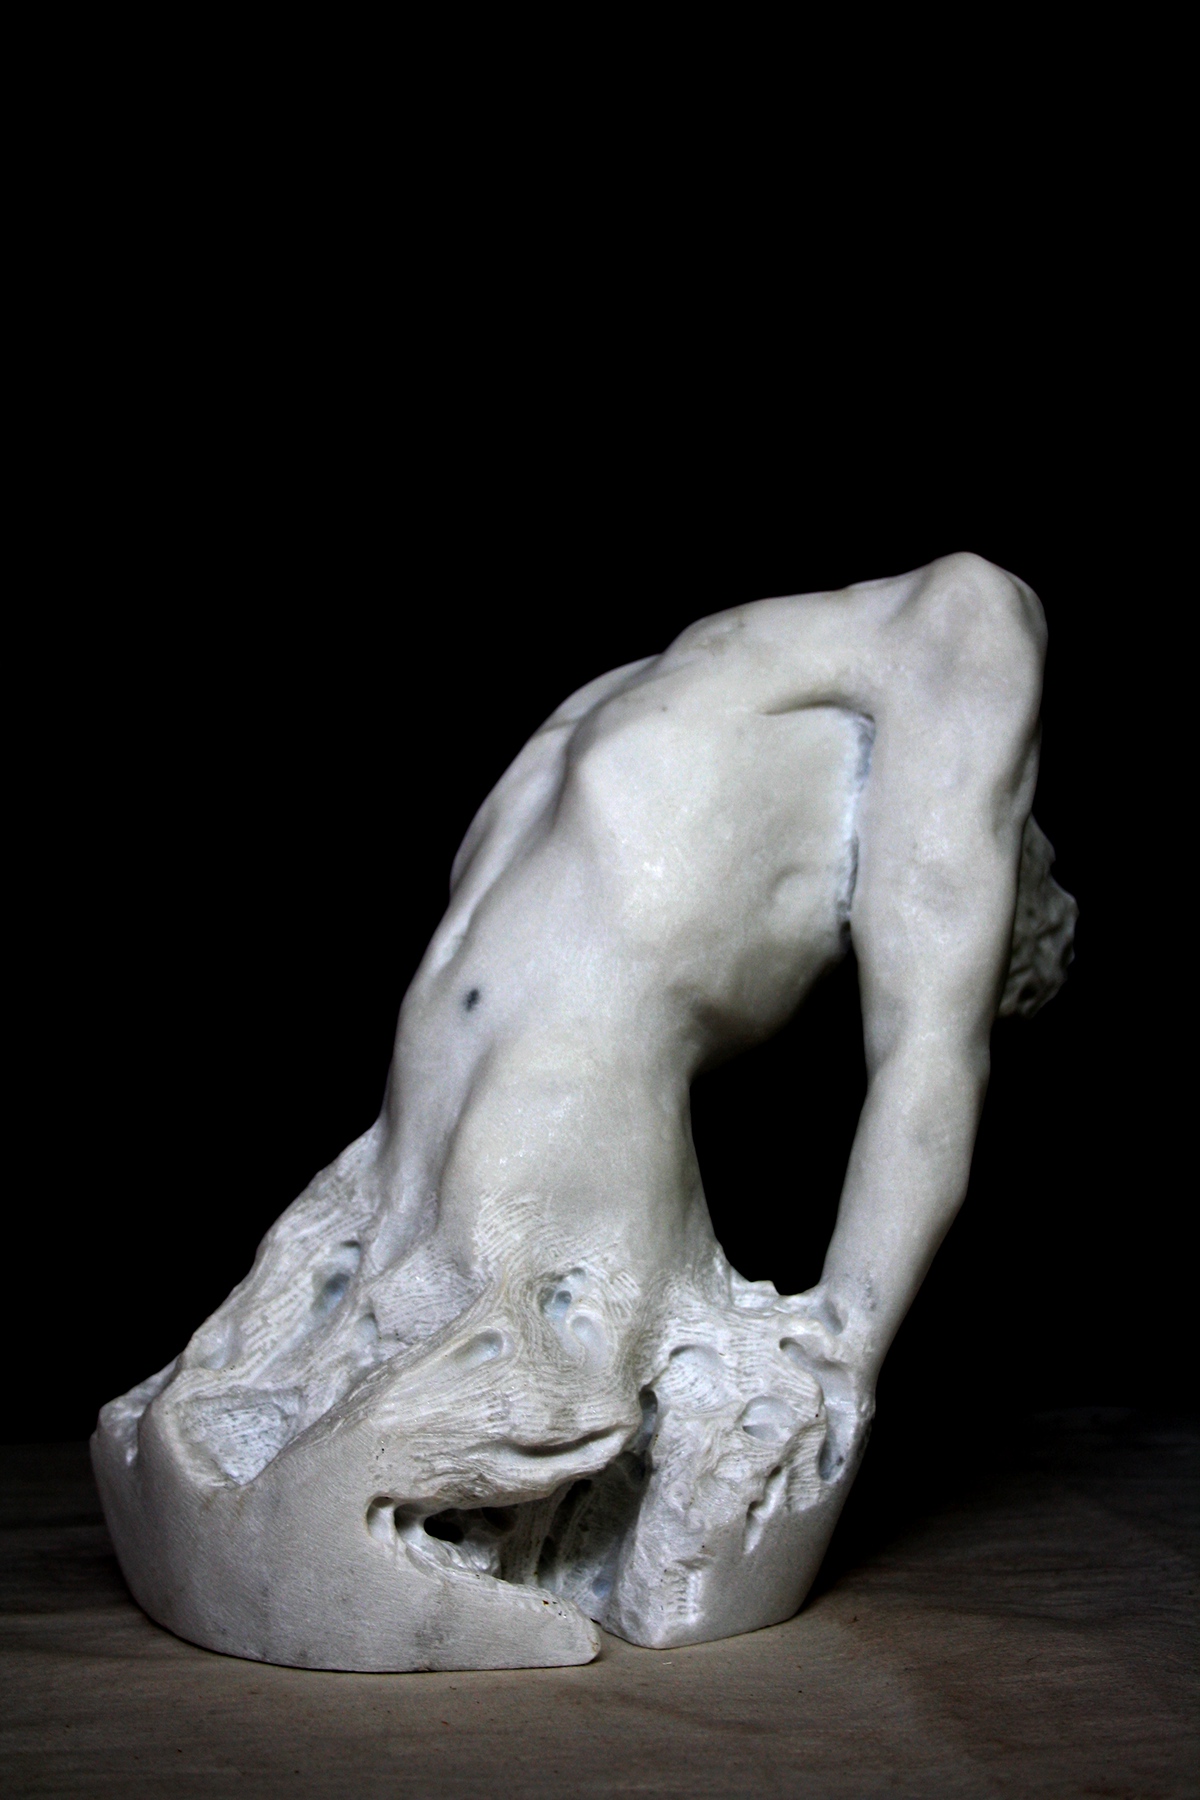 eco root man uomo radica pain anguish angoscia dolore sculpture scultura clay creta